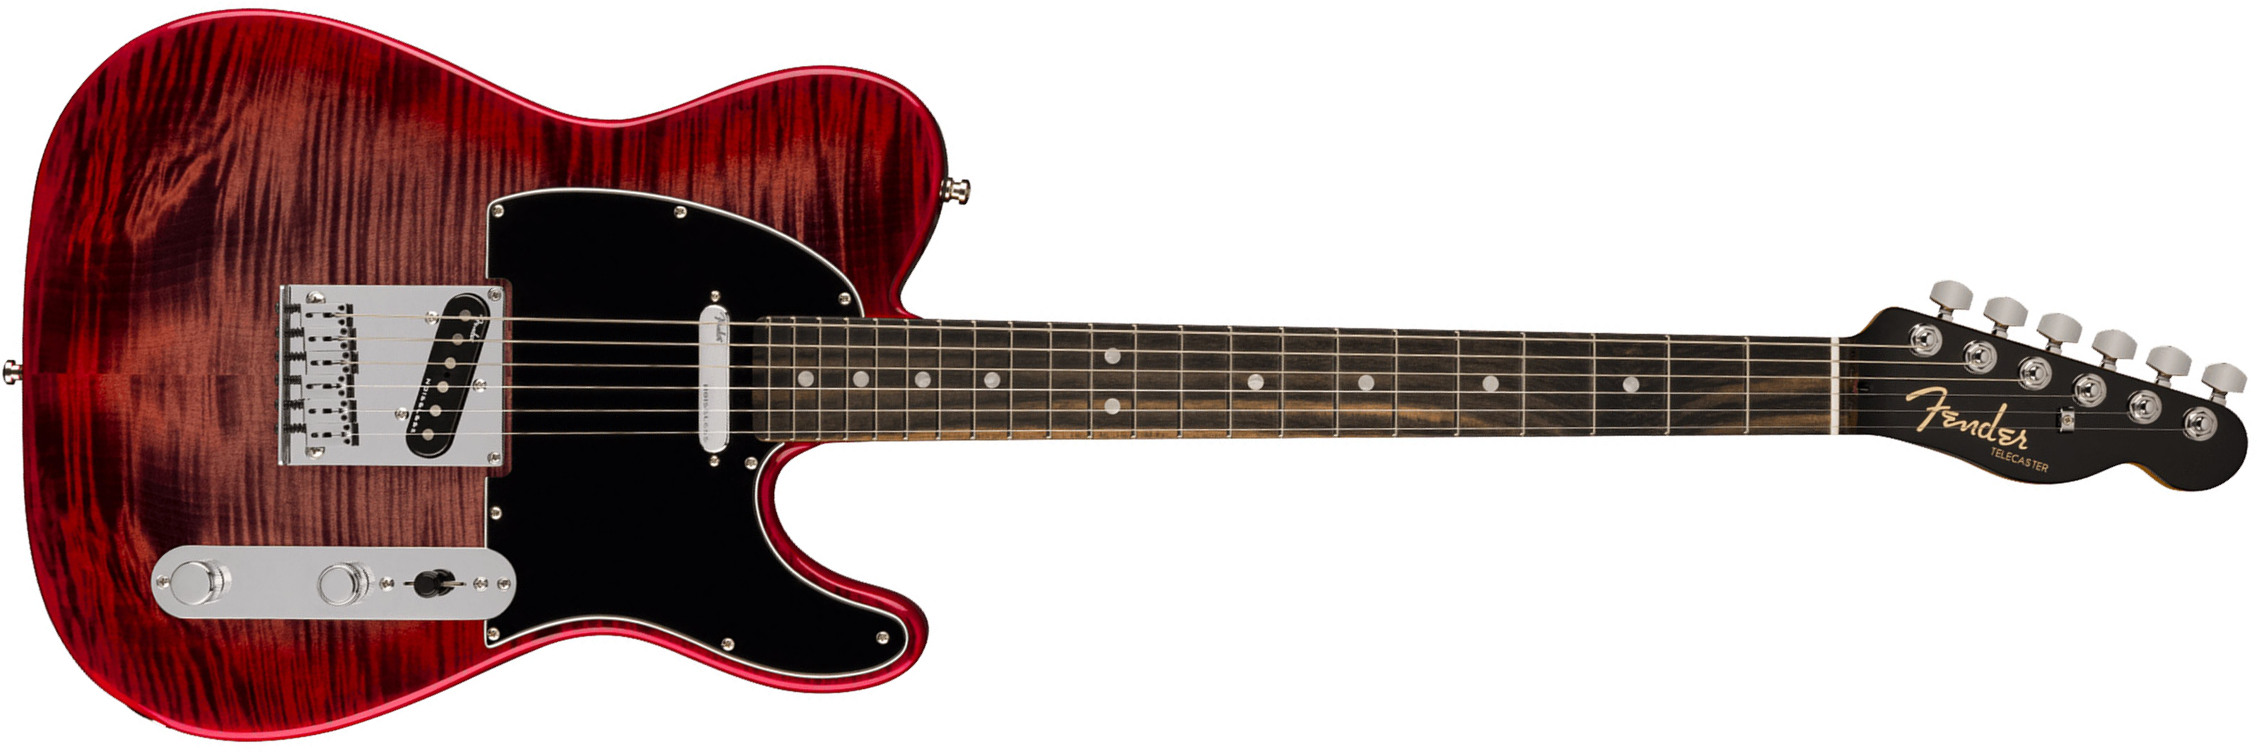 Fender Tele American Ultra Ltd Usa 2s Ht Eb - Umbra - Tel shape electric guitar - Main picture